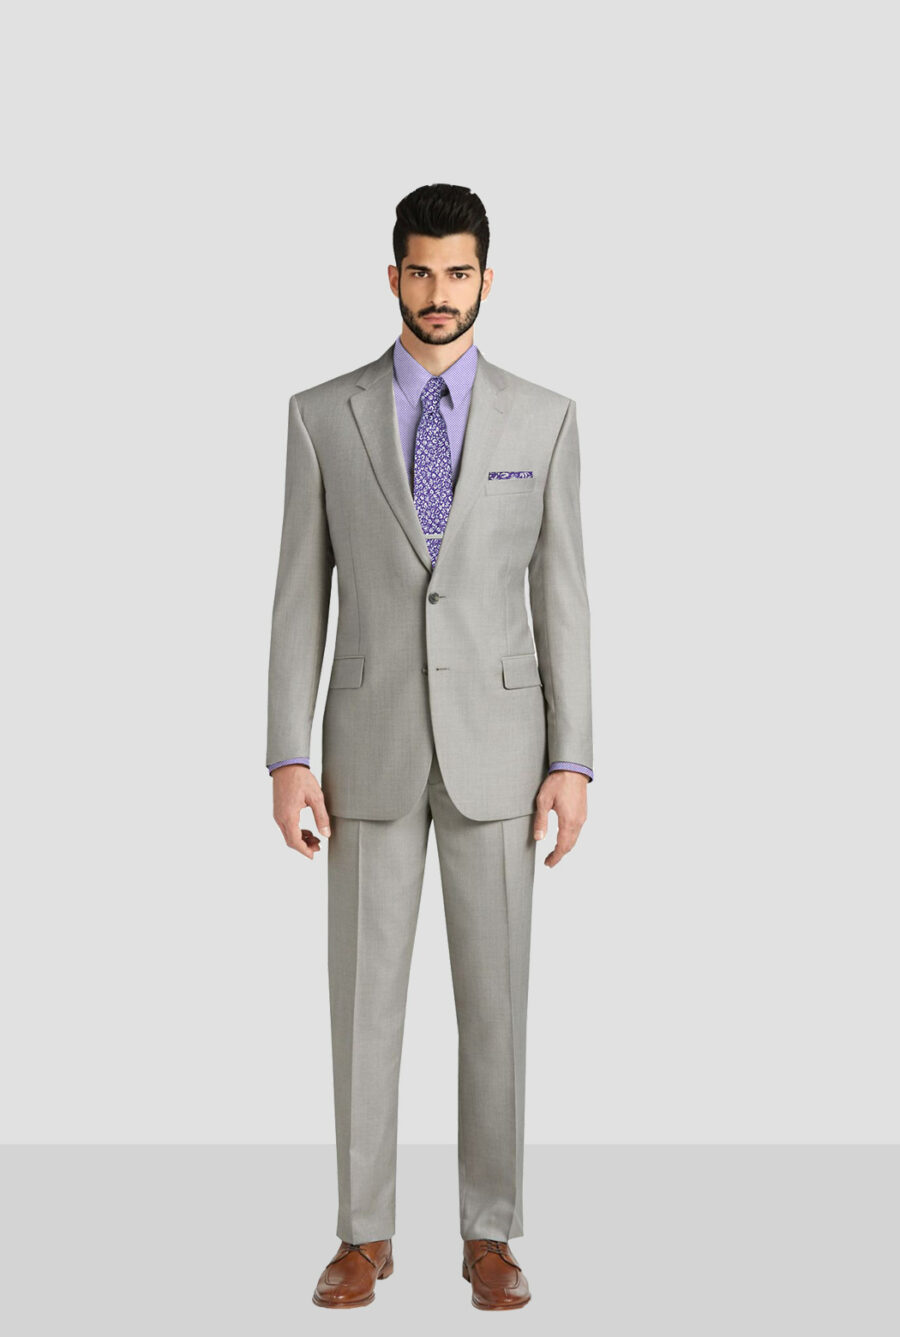 https://tailormade-shirts.com/wp-content/uploads/2020/12/Light-Grey-Mens-Suit-900x1337.jpg